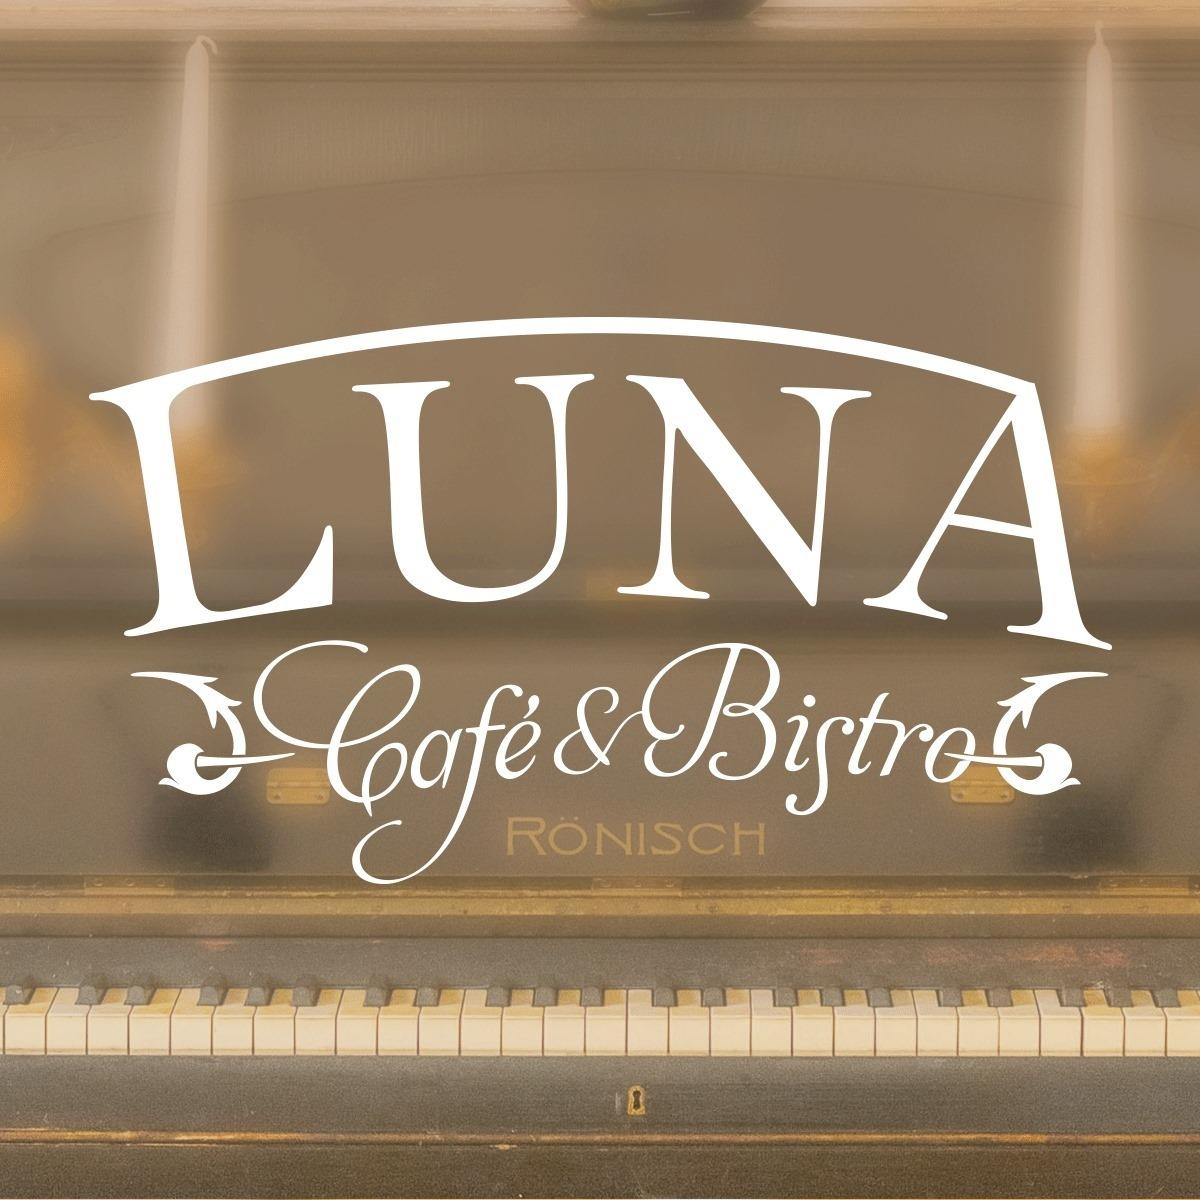 Luna Cafe and Bistro